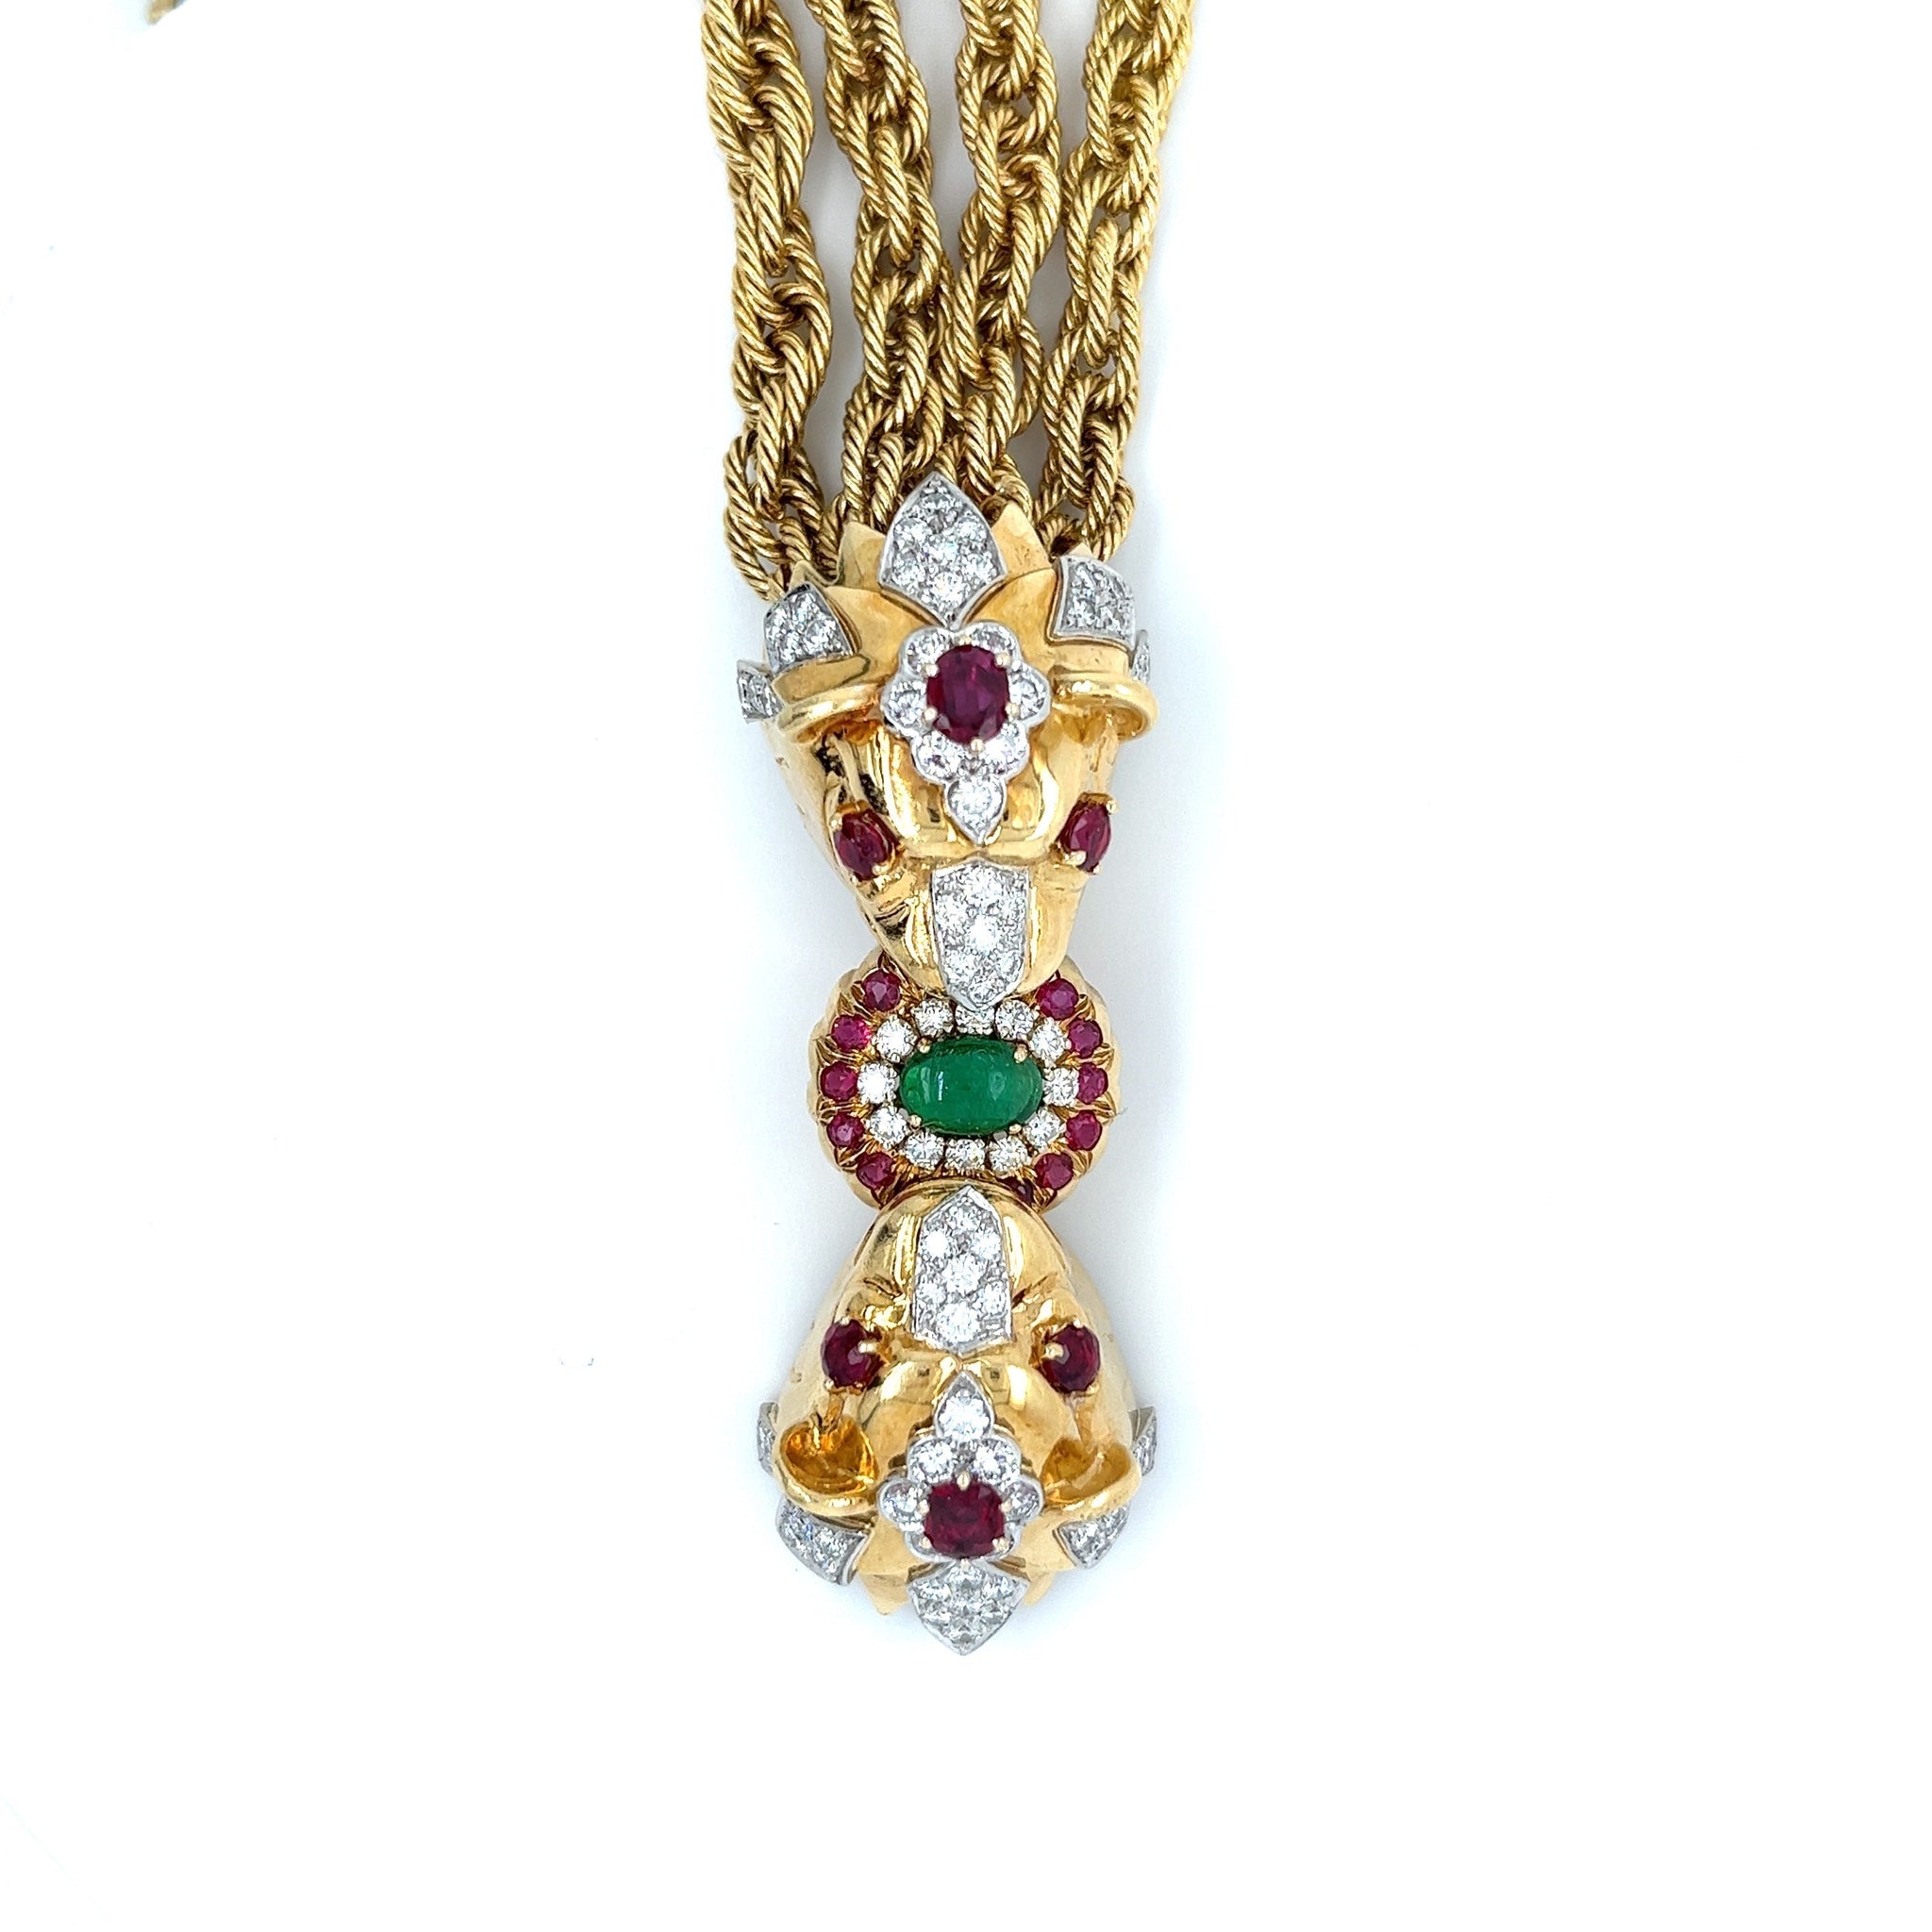 18K Gold & Platinum Double Headed Biting Lion Multi Rope Chain Bracelet With Emeralds, Diamonds, & Rubies-Bracelets-ASSAY